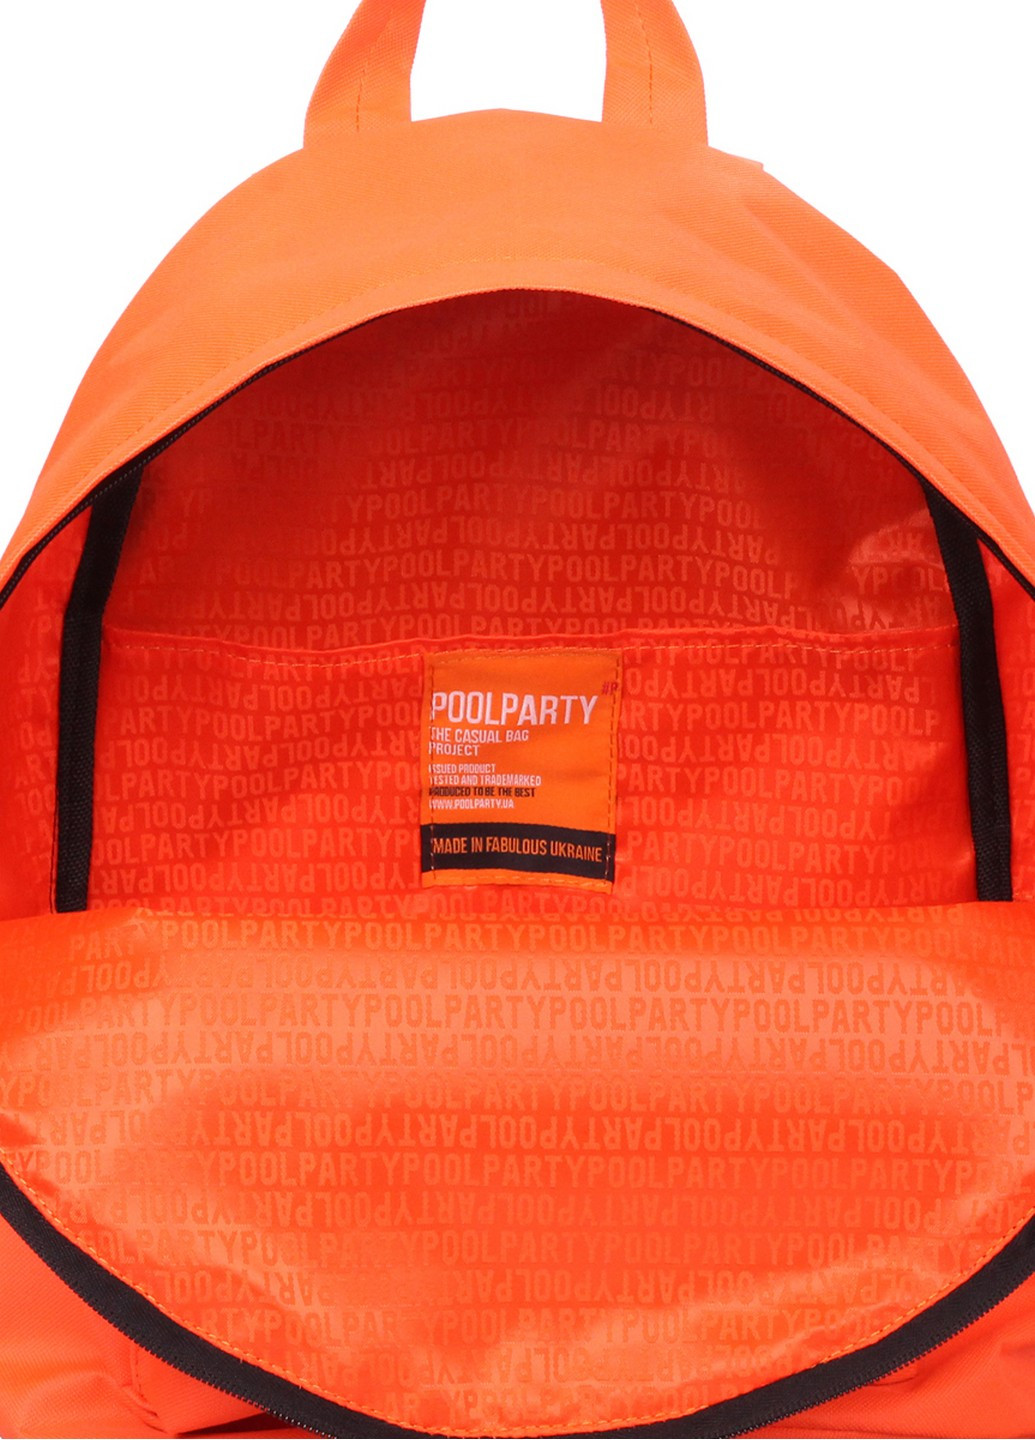 Повседневный рюкзак 40х30х16 см PoolParty (206211597)